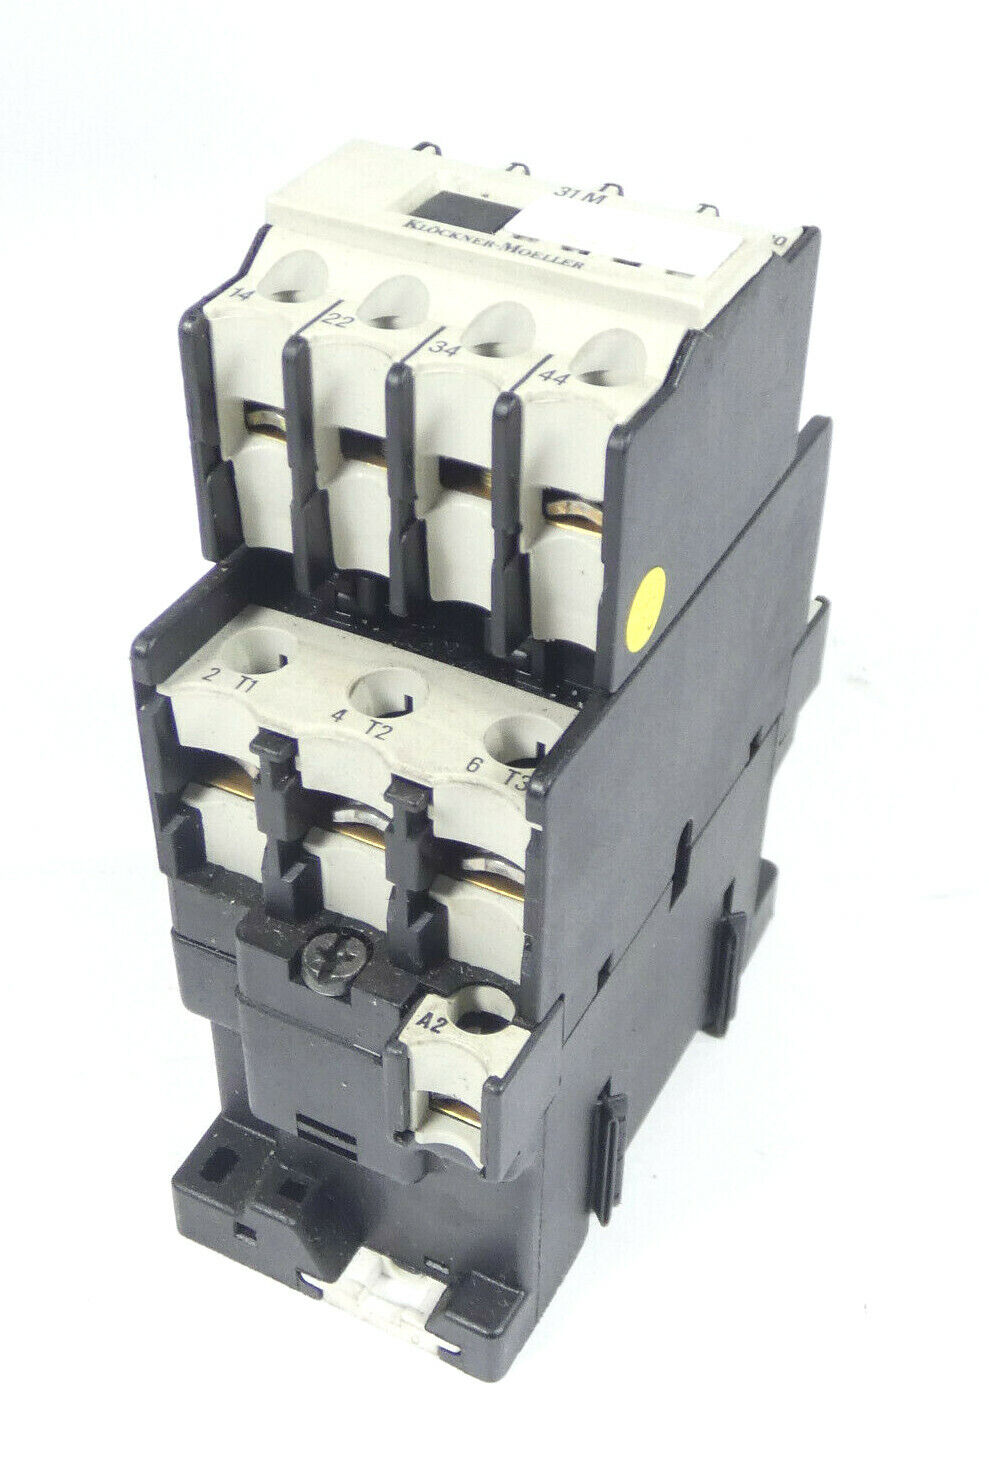 Klockner Moeller DIL 0 A M Power Switch + 31 DIL M contactor rel